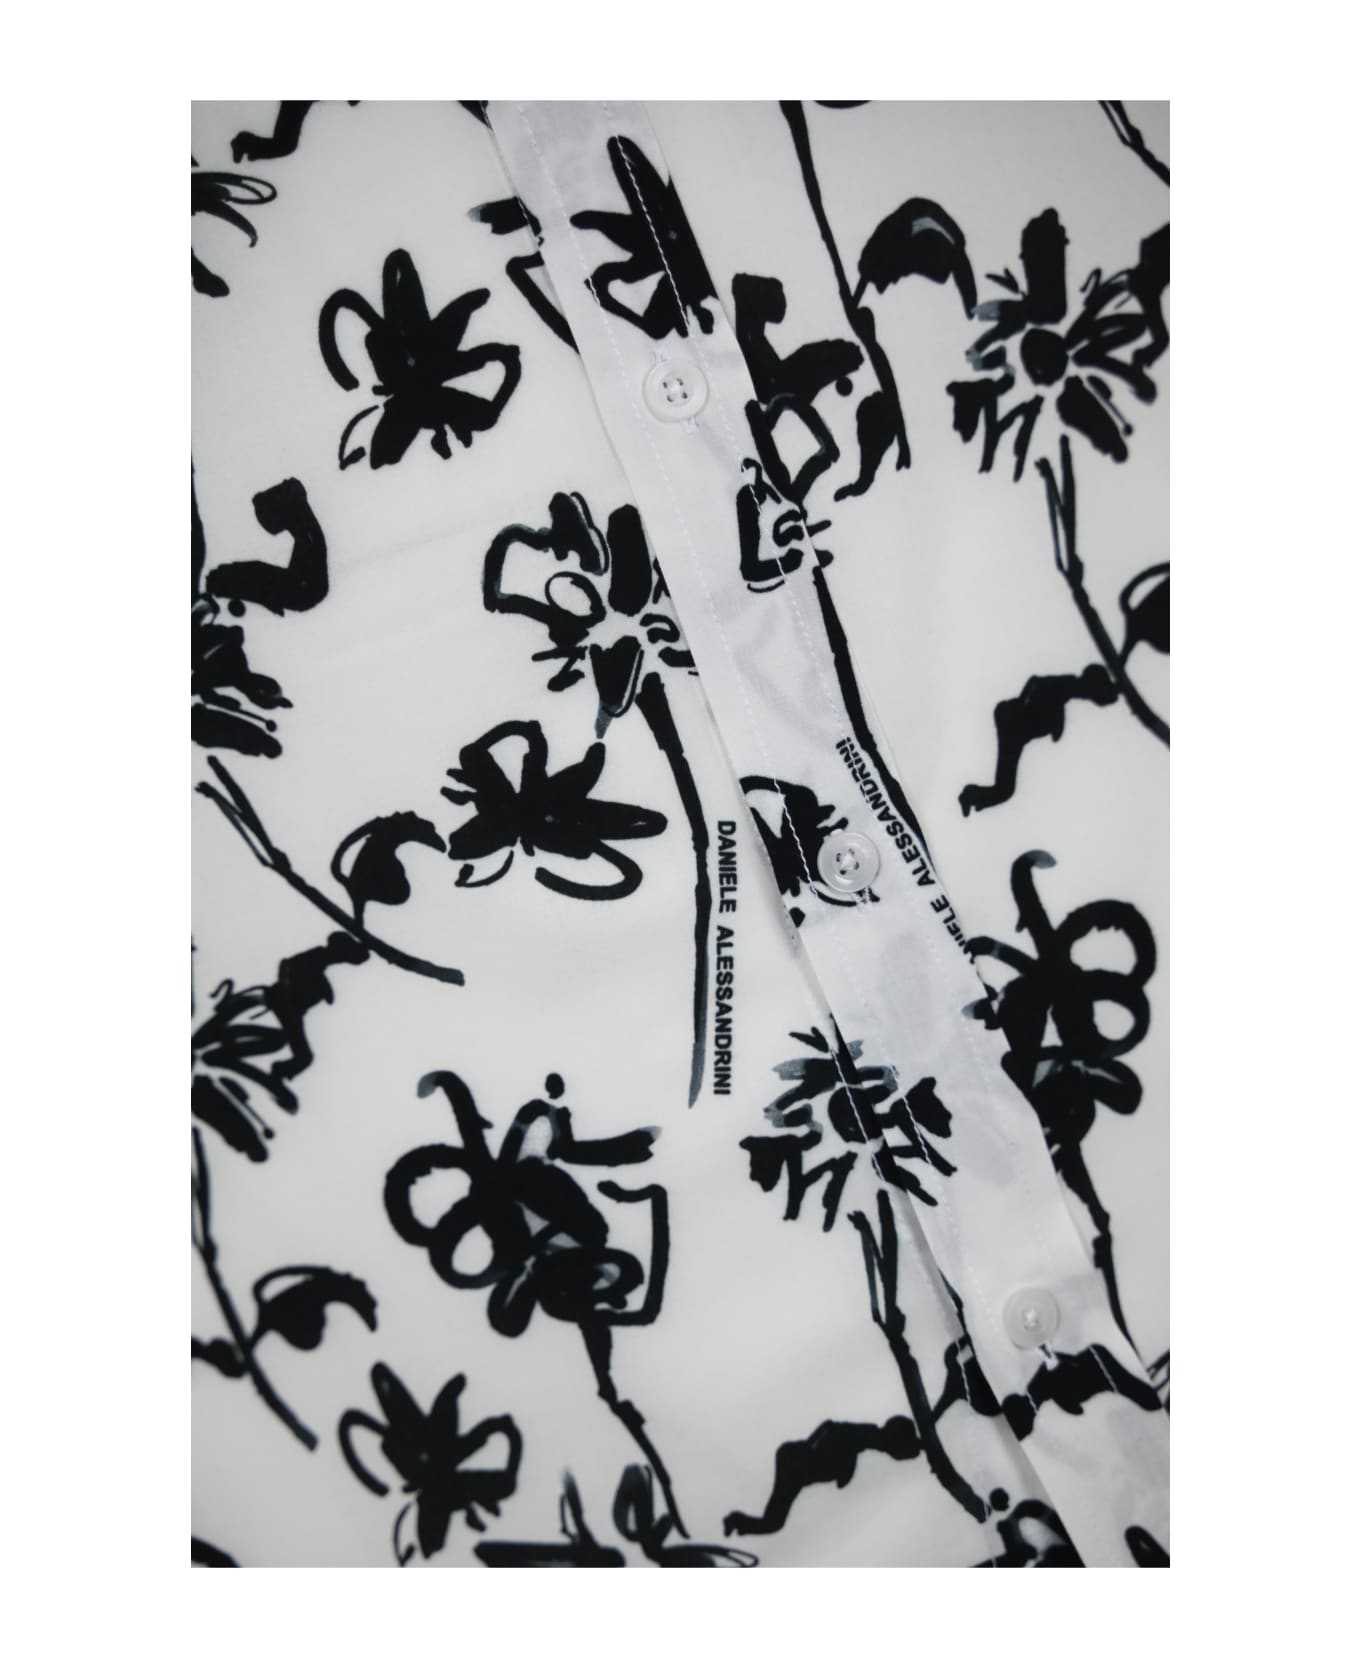 Daniele Alessandrini White/black Floral Patterned Shirt - Bianco/nero